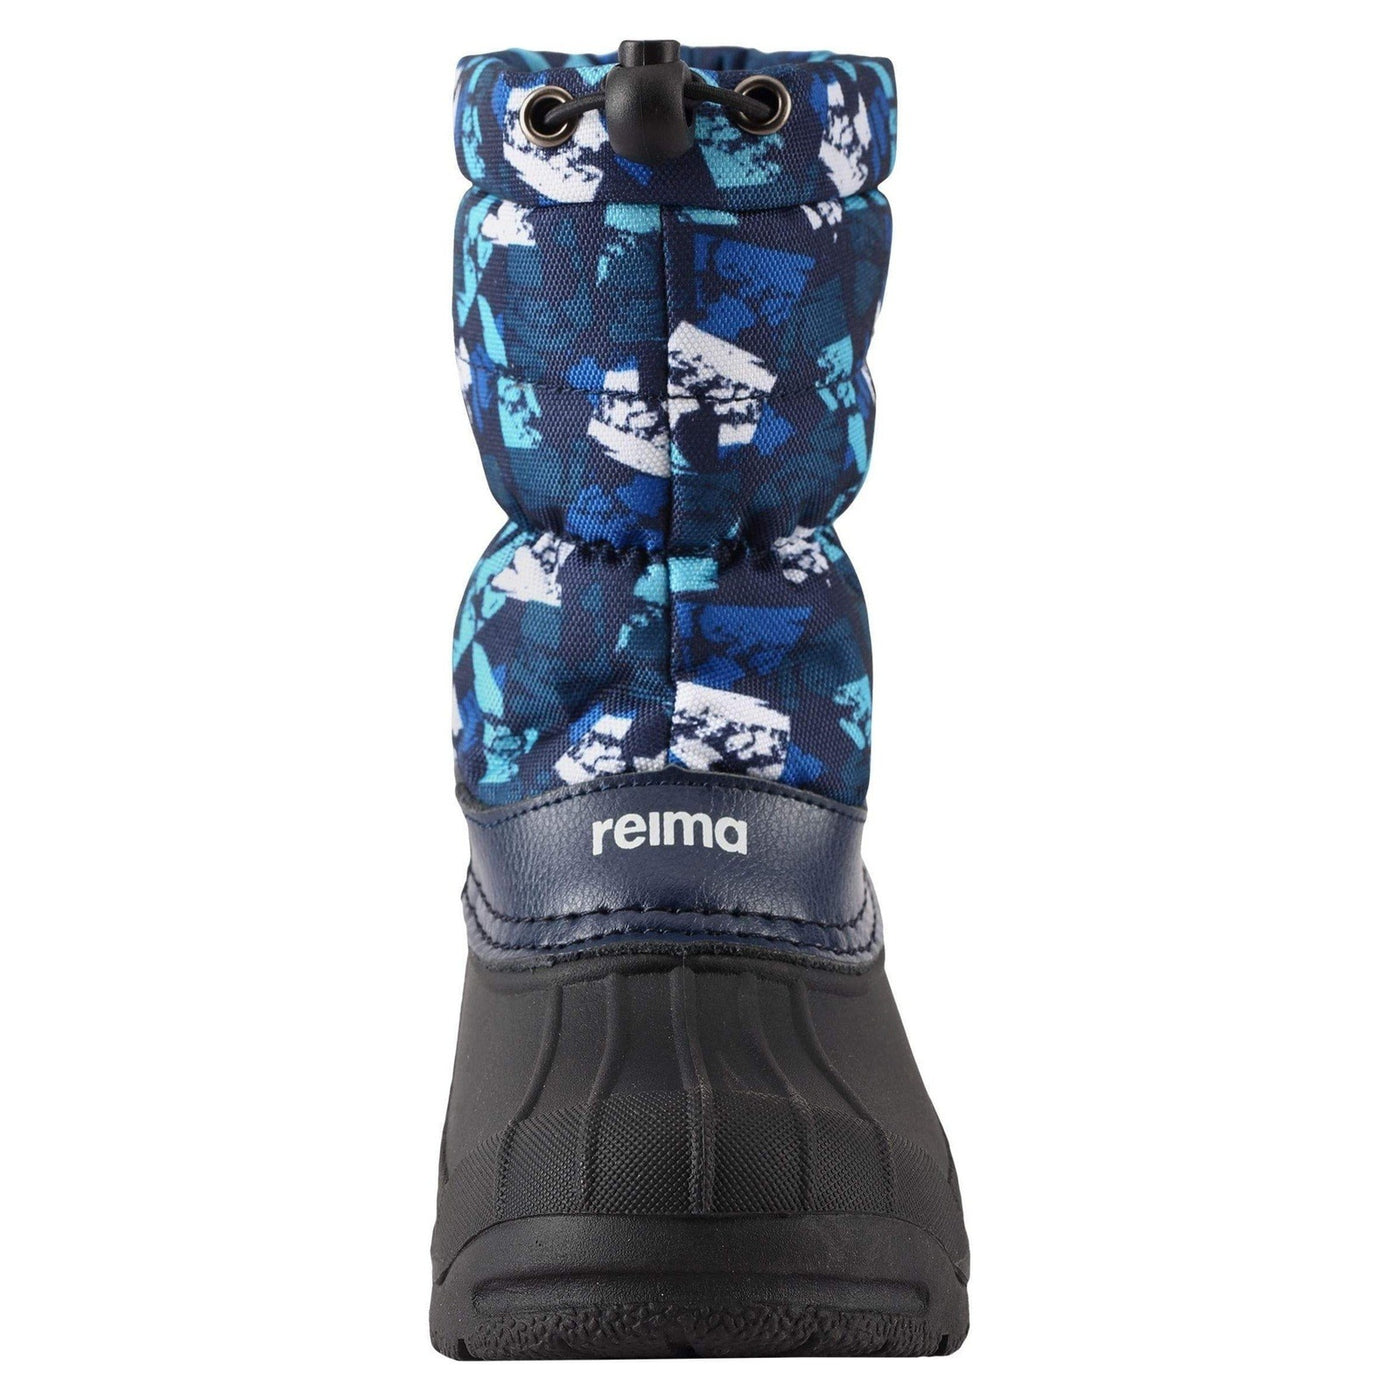 SnowKids Footwear Reima Nefar Water Resistant Winter Boots - Navy